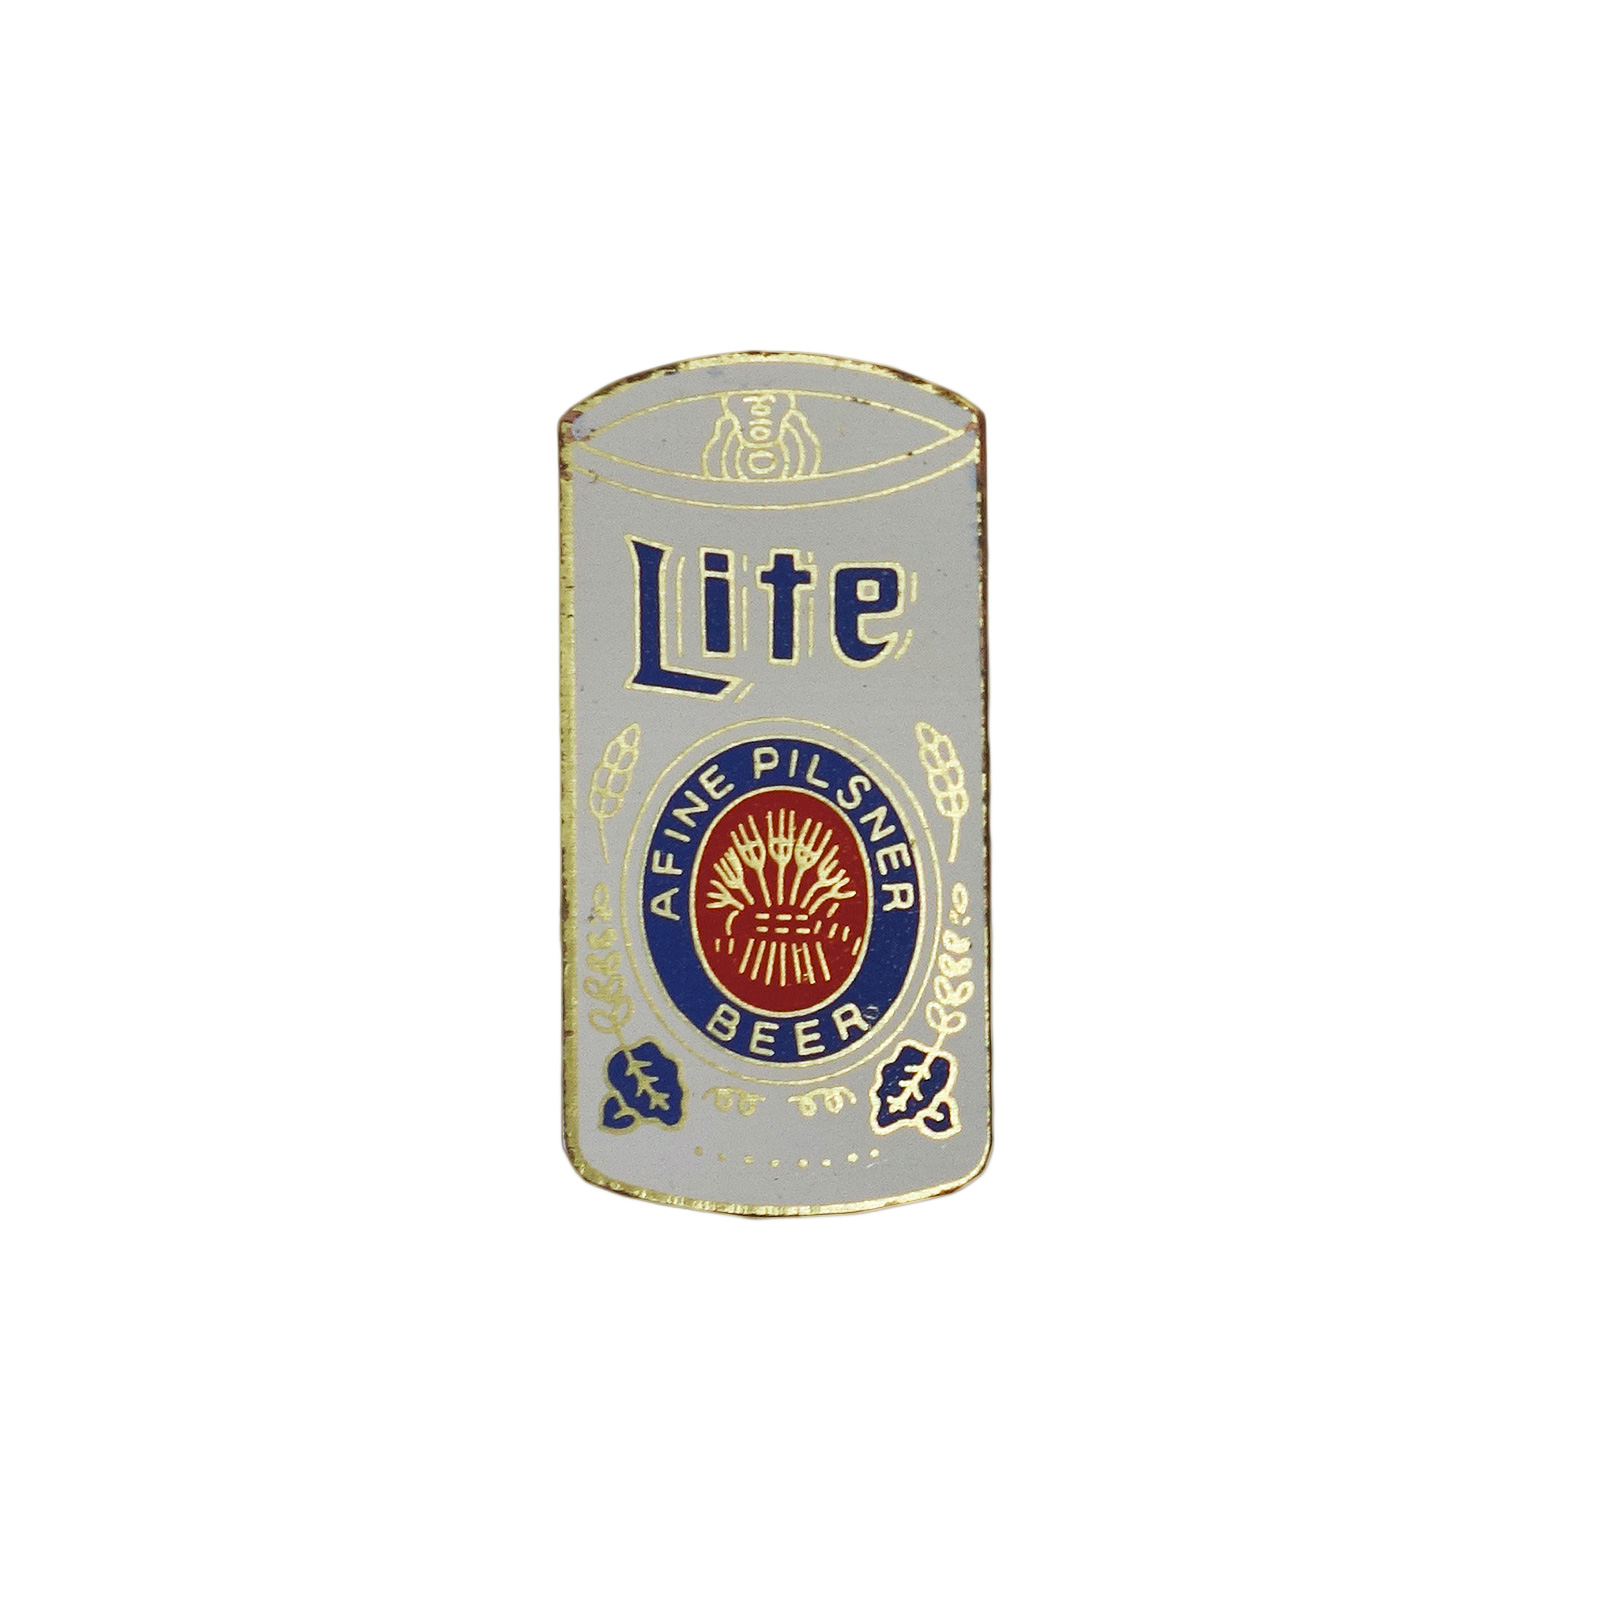 Lite A FINE PILSNER BEER ファインピルスナービール ピンズ お酒 留め具付き